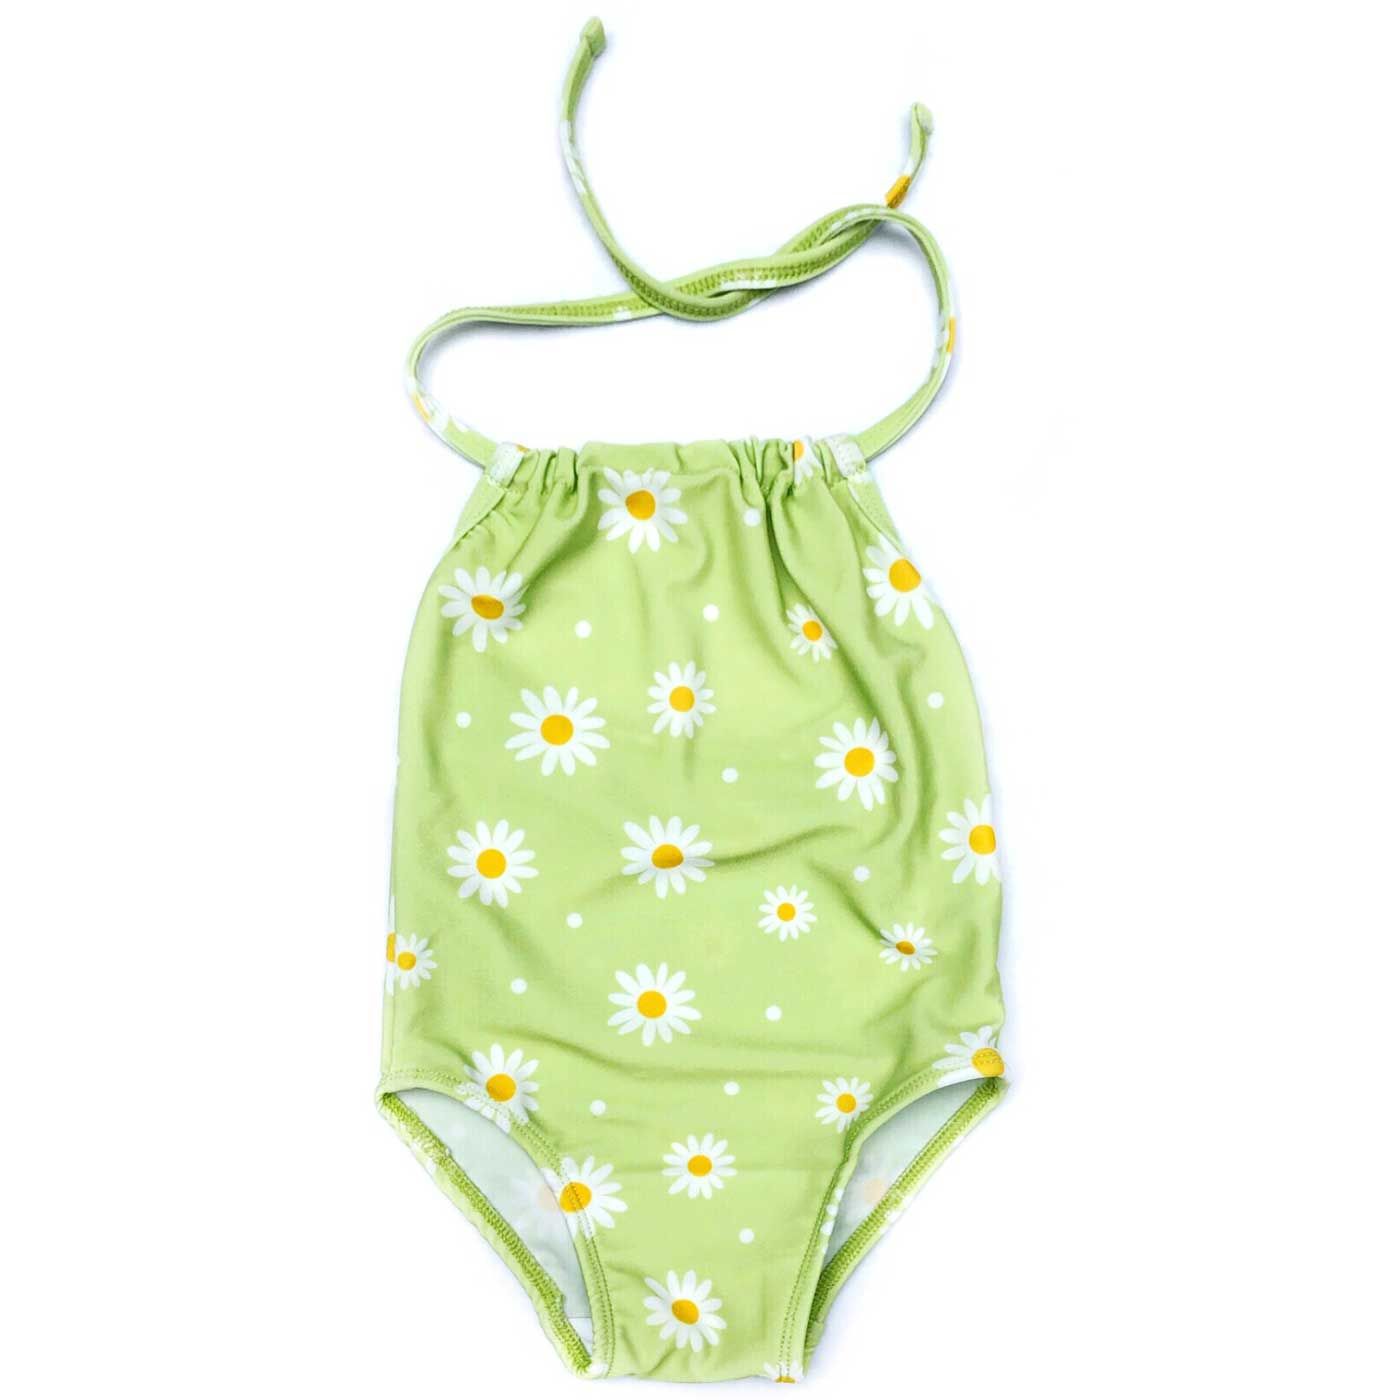 Little Whimsea Daisy Swimsuit in Lime - S - 1